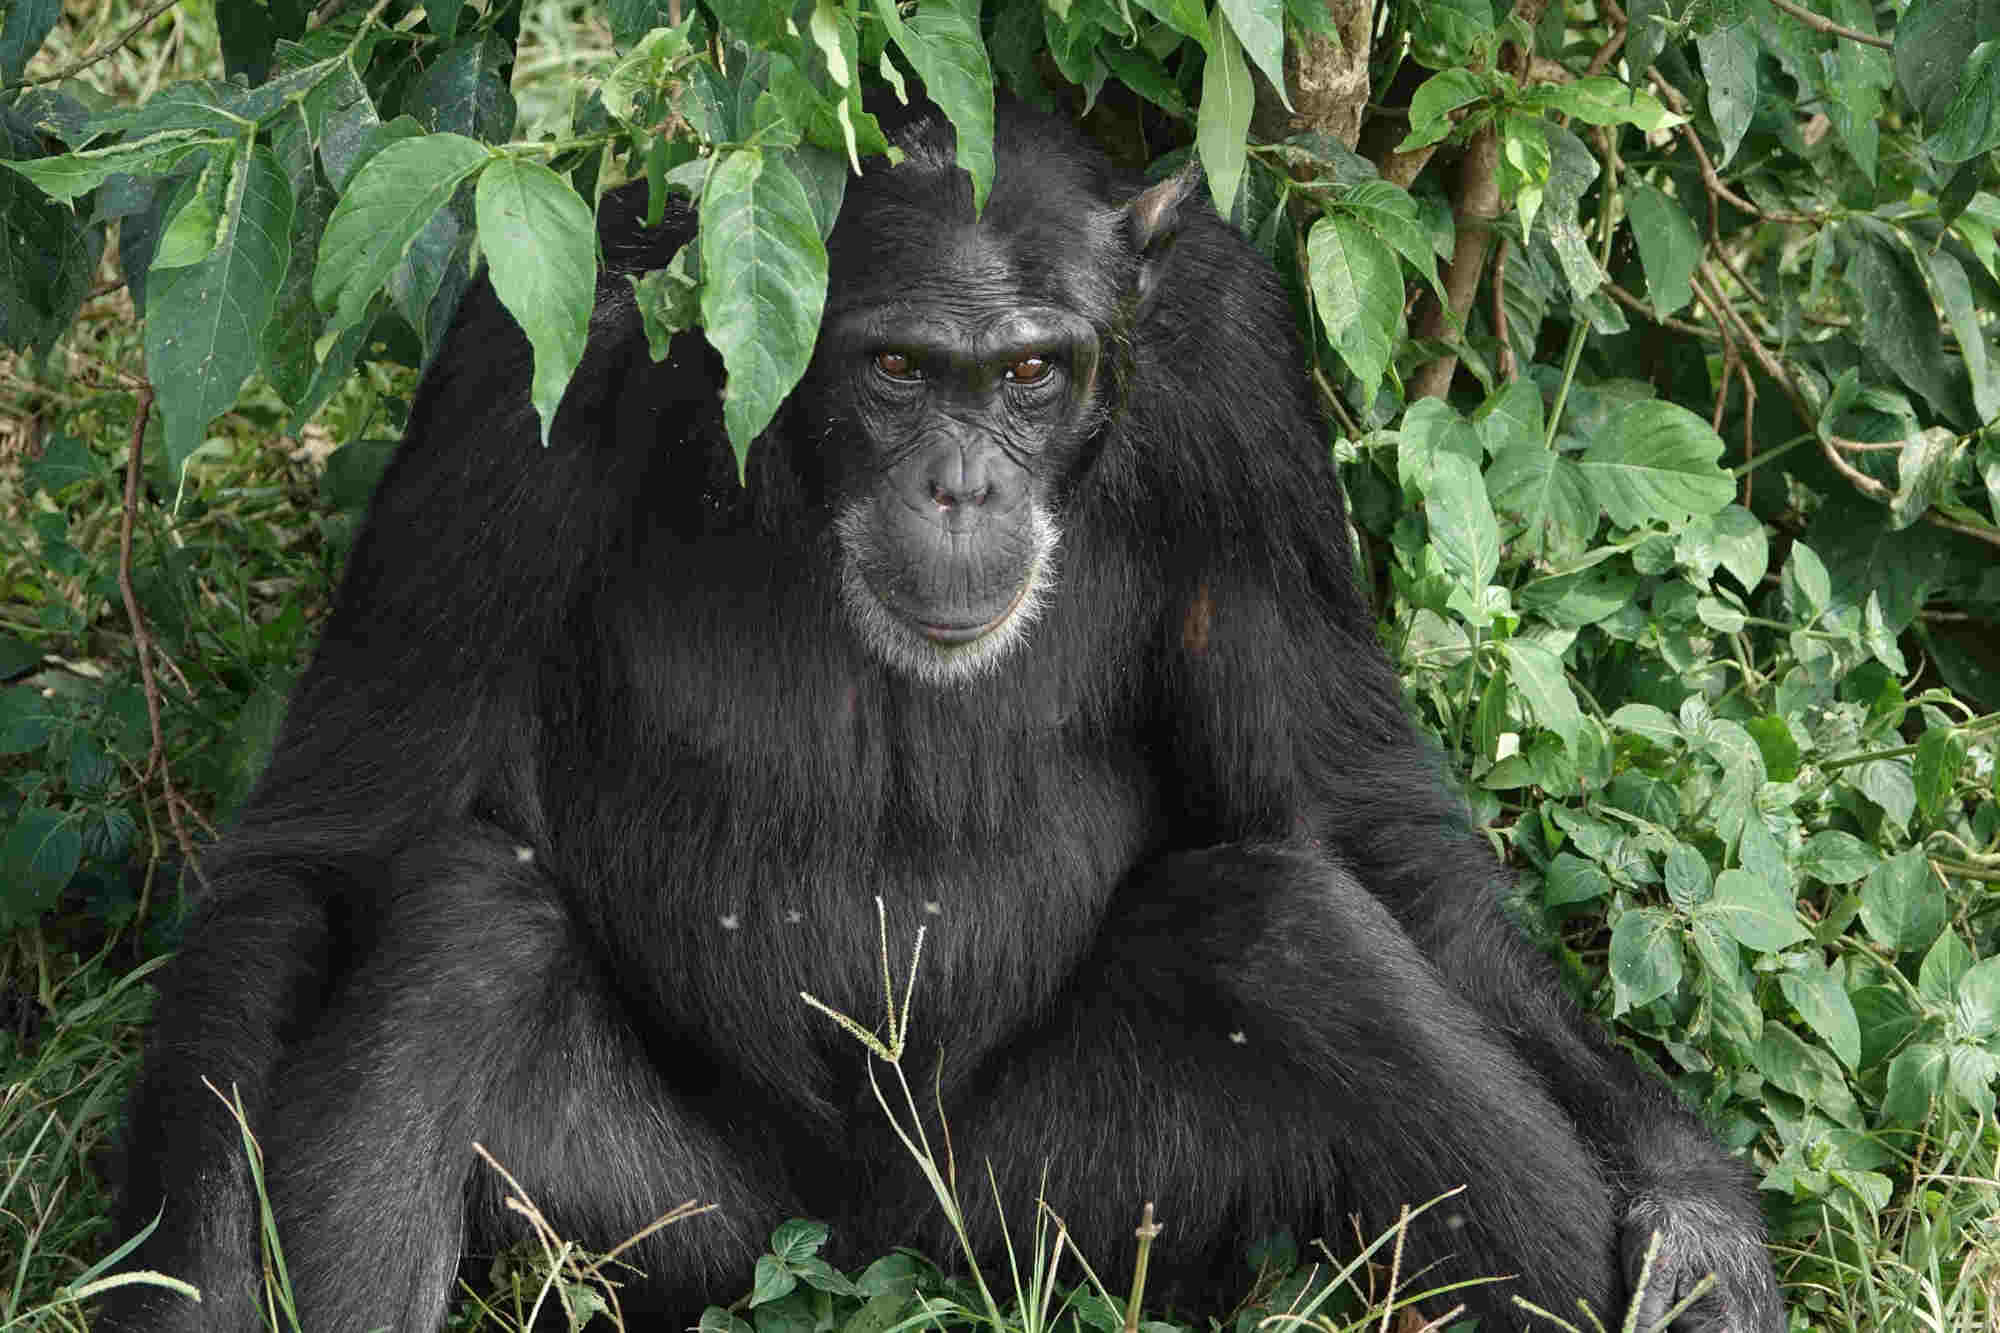 scimpanzé uganda